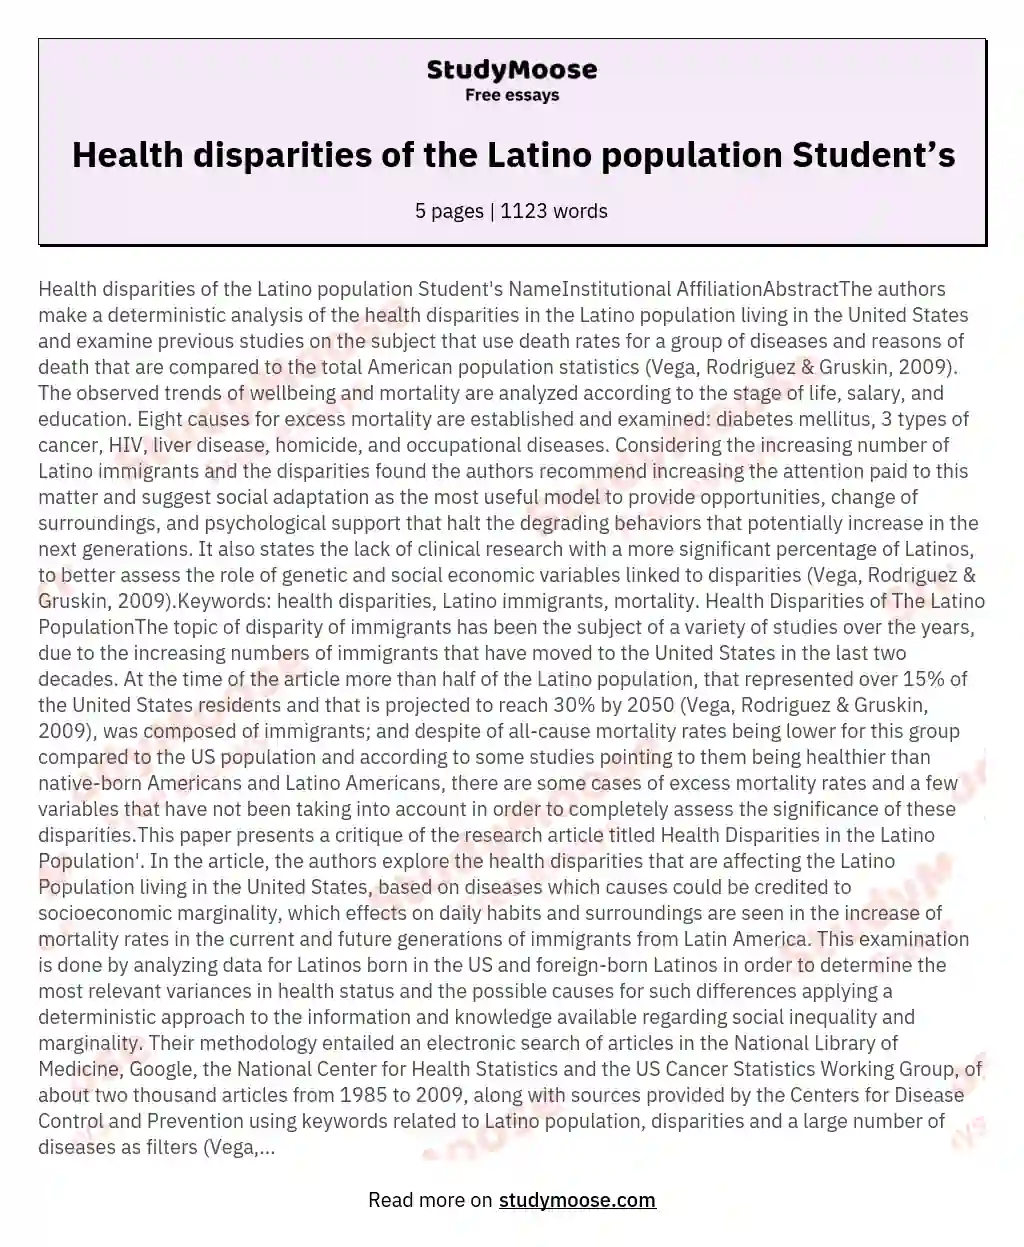 Health disparities of the Latino population Student’s essay